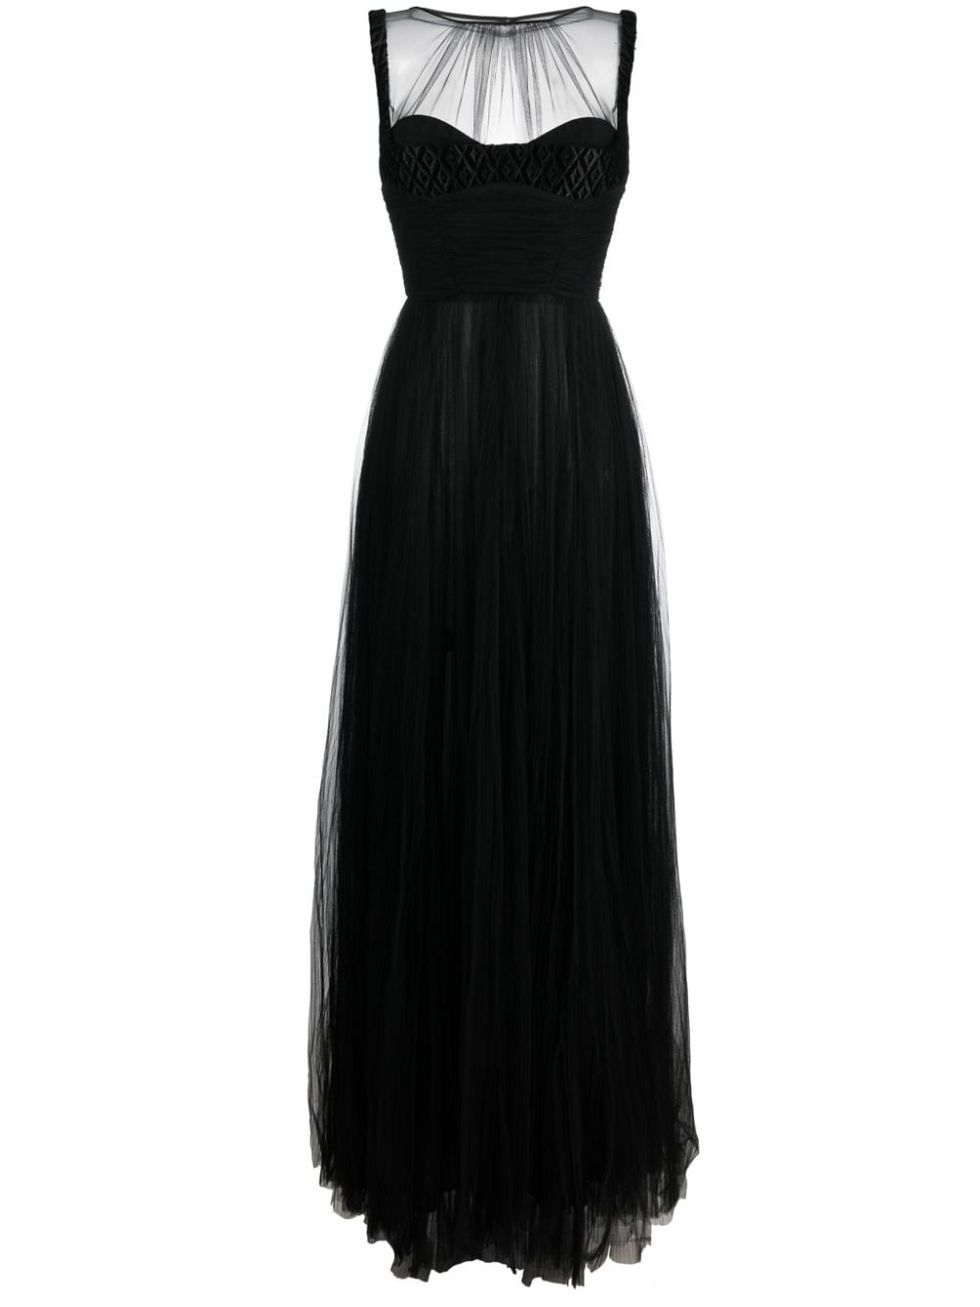 a black dress with a strap